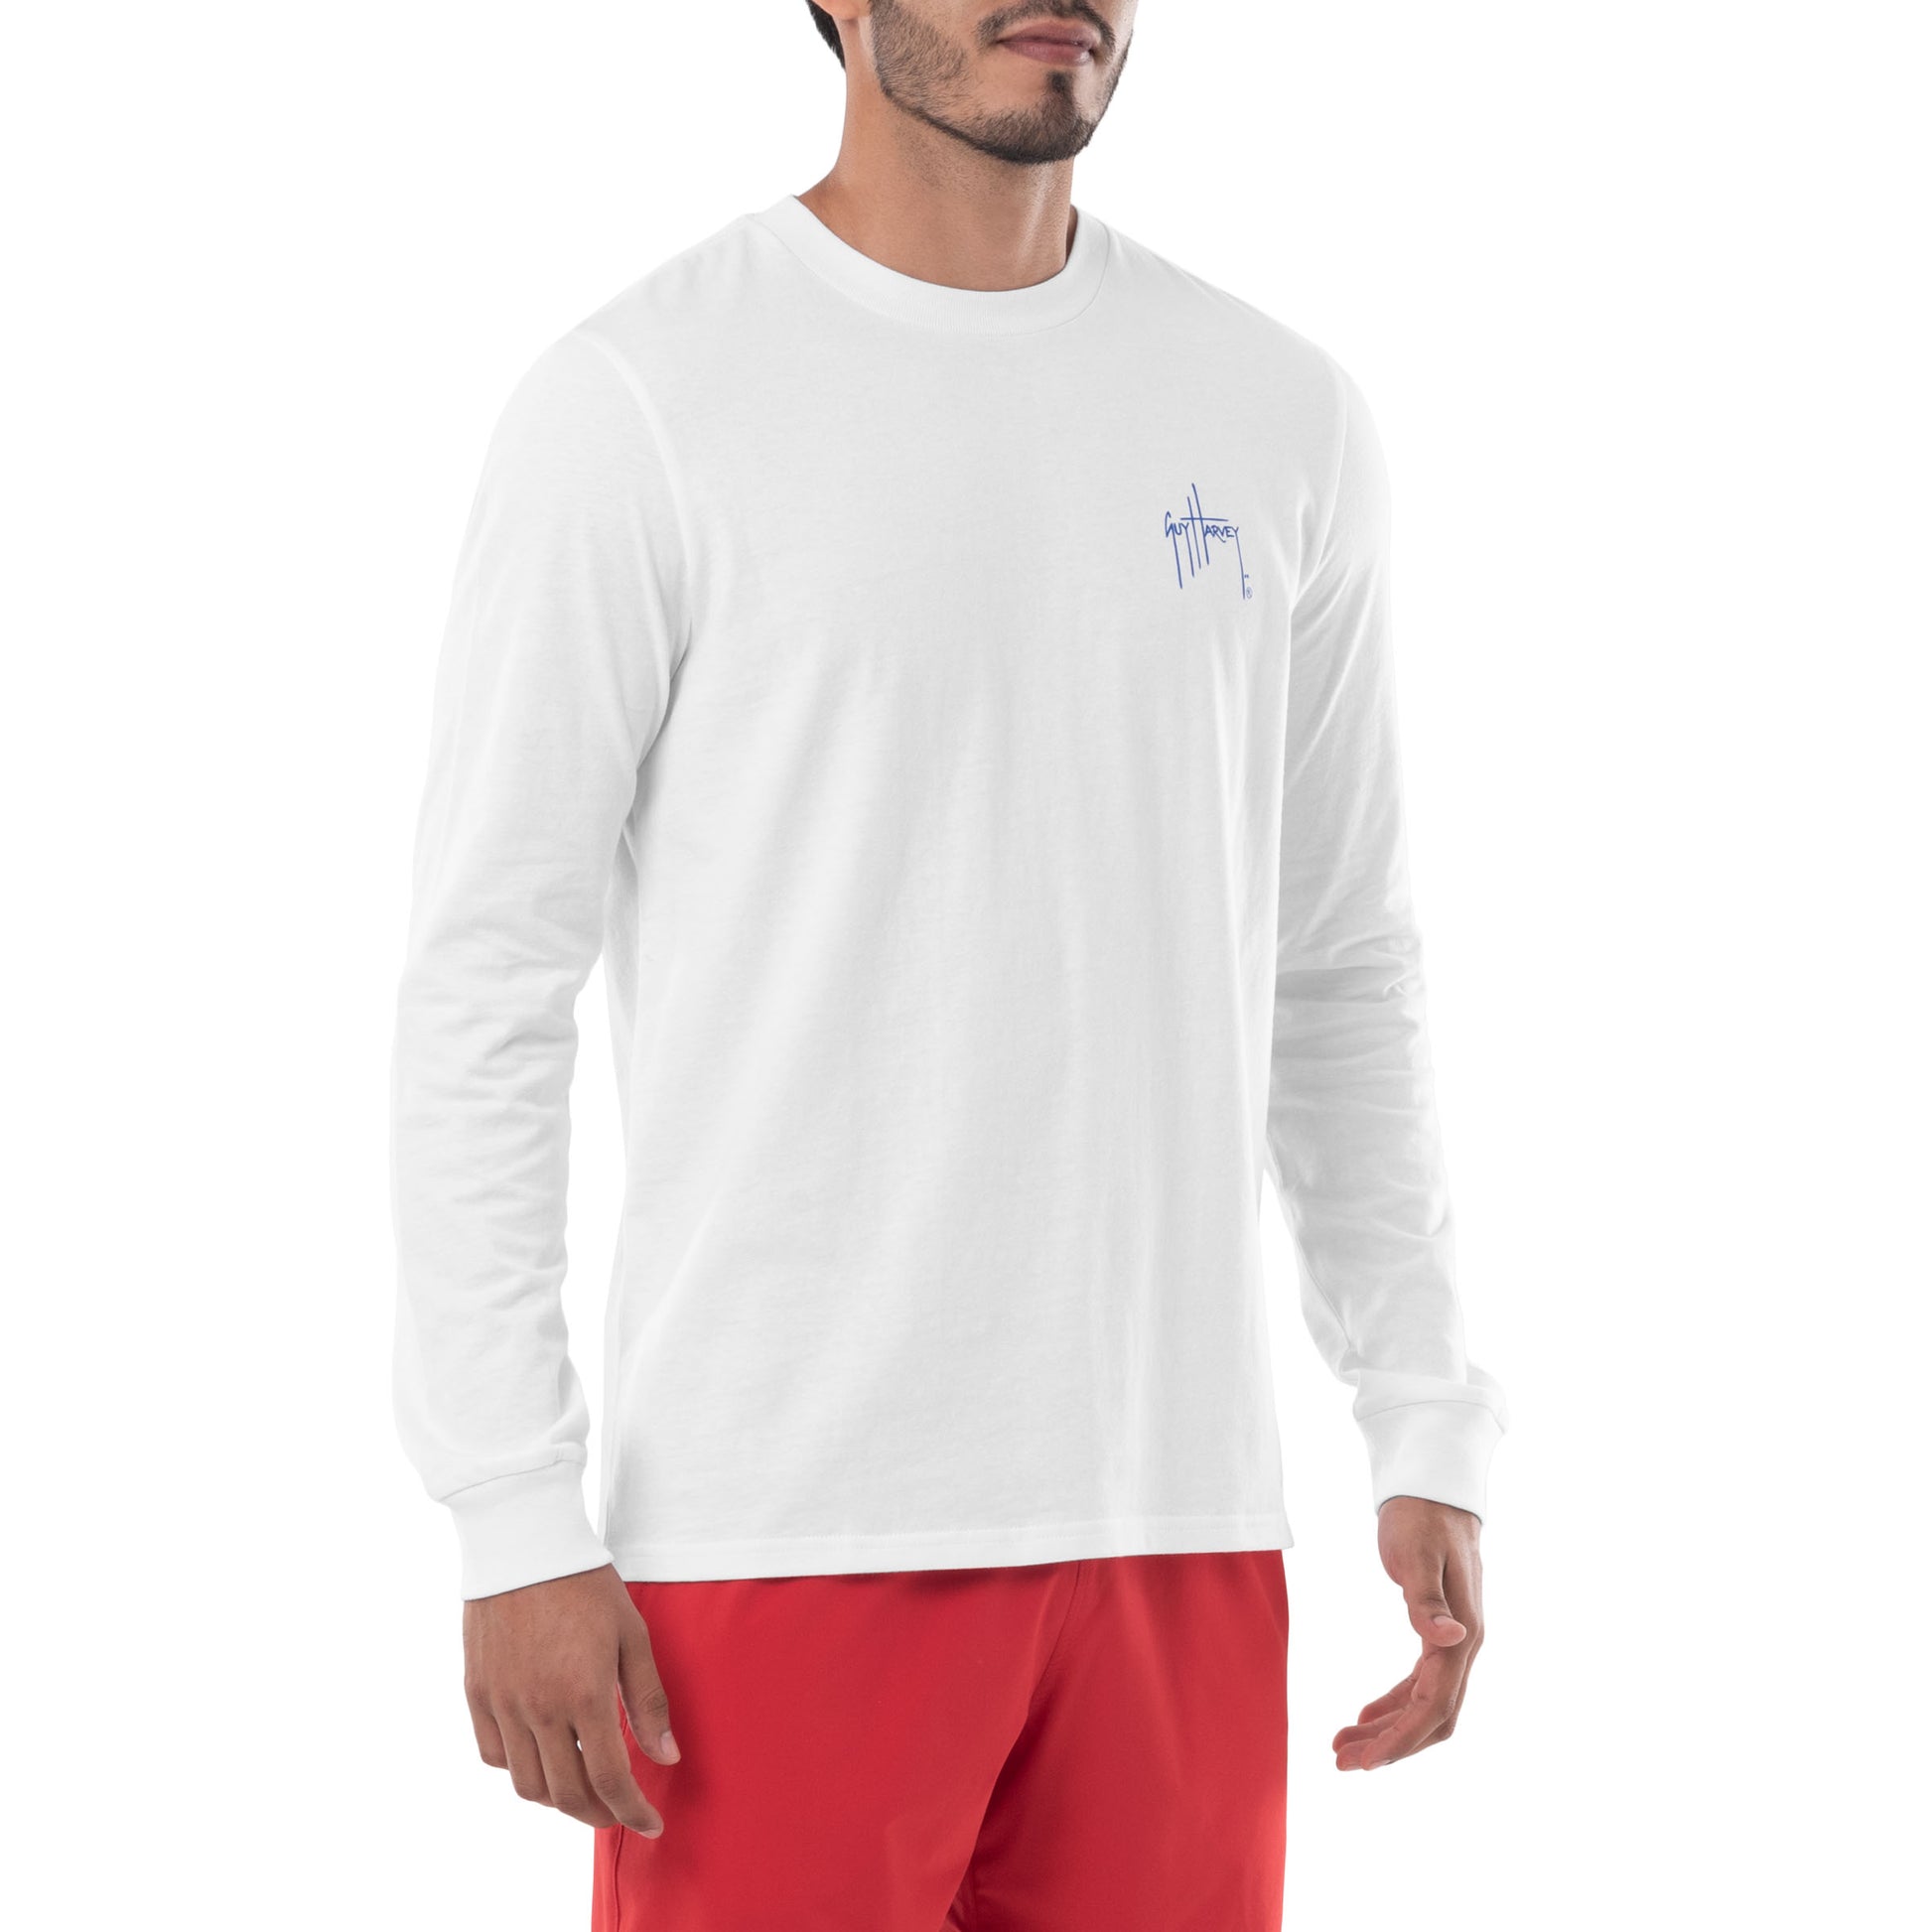 Men's All American Long Sleeve T-Shirt View 4